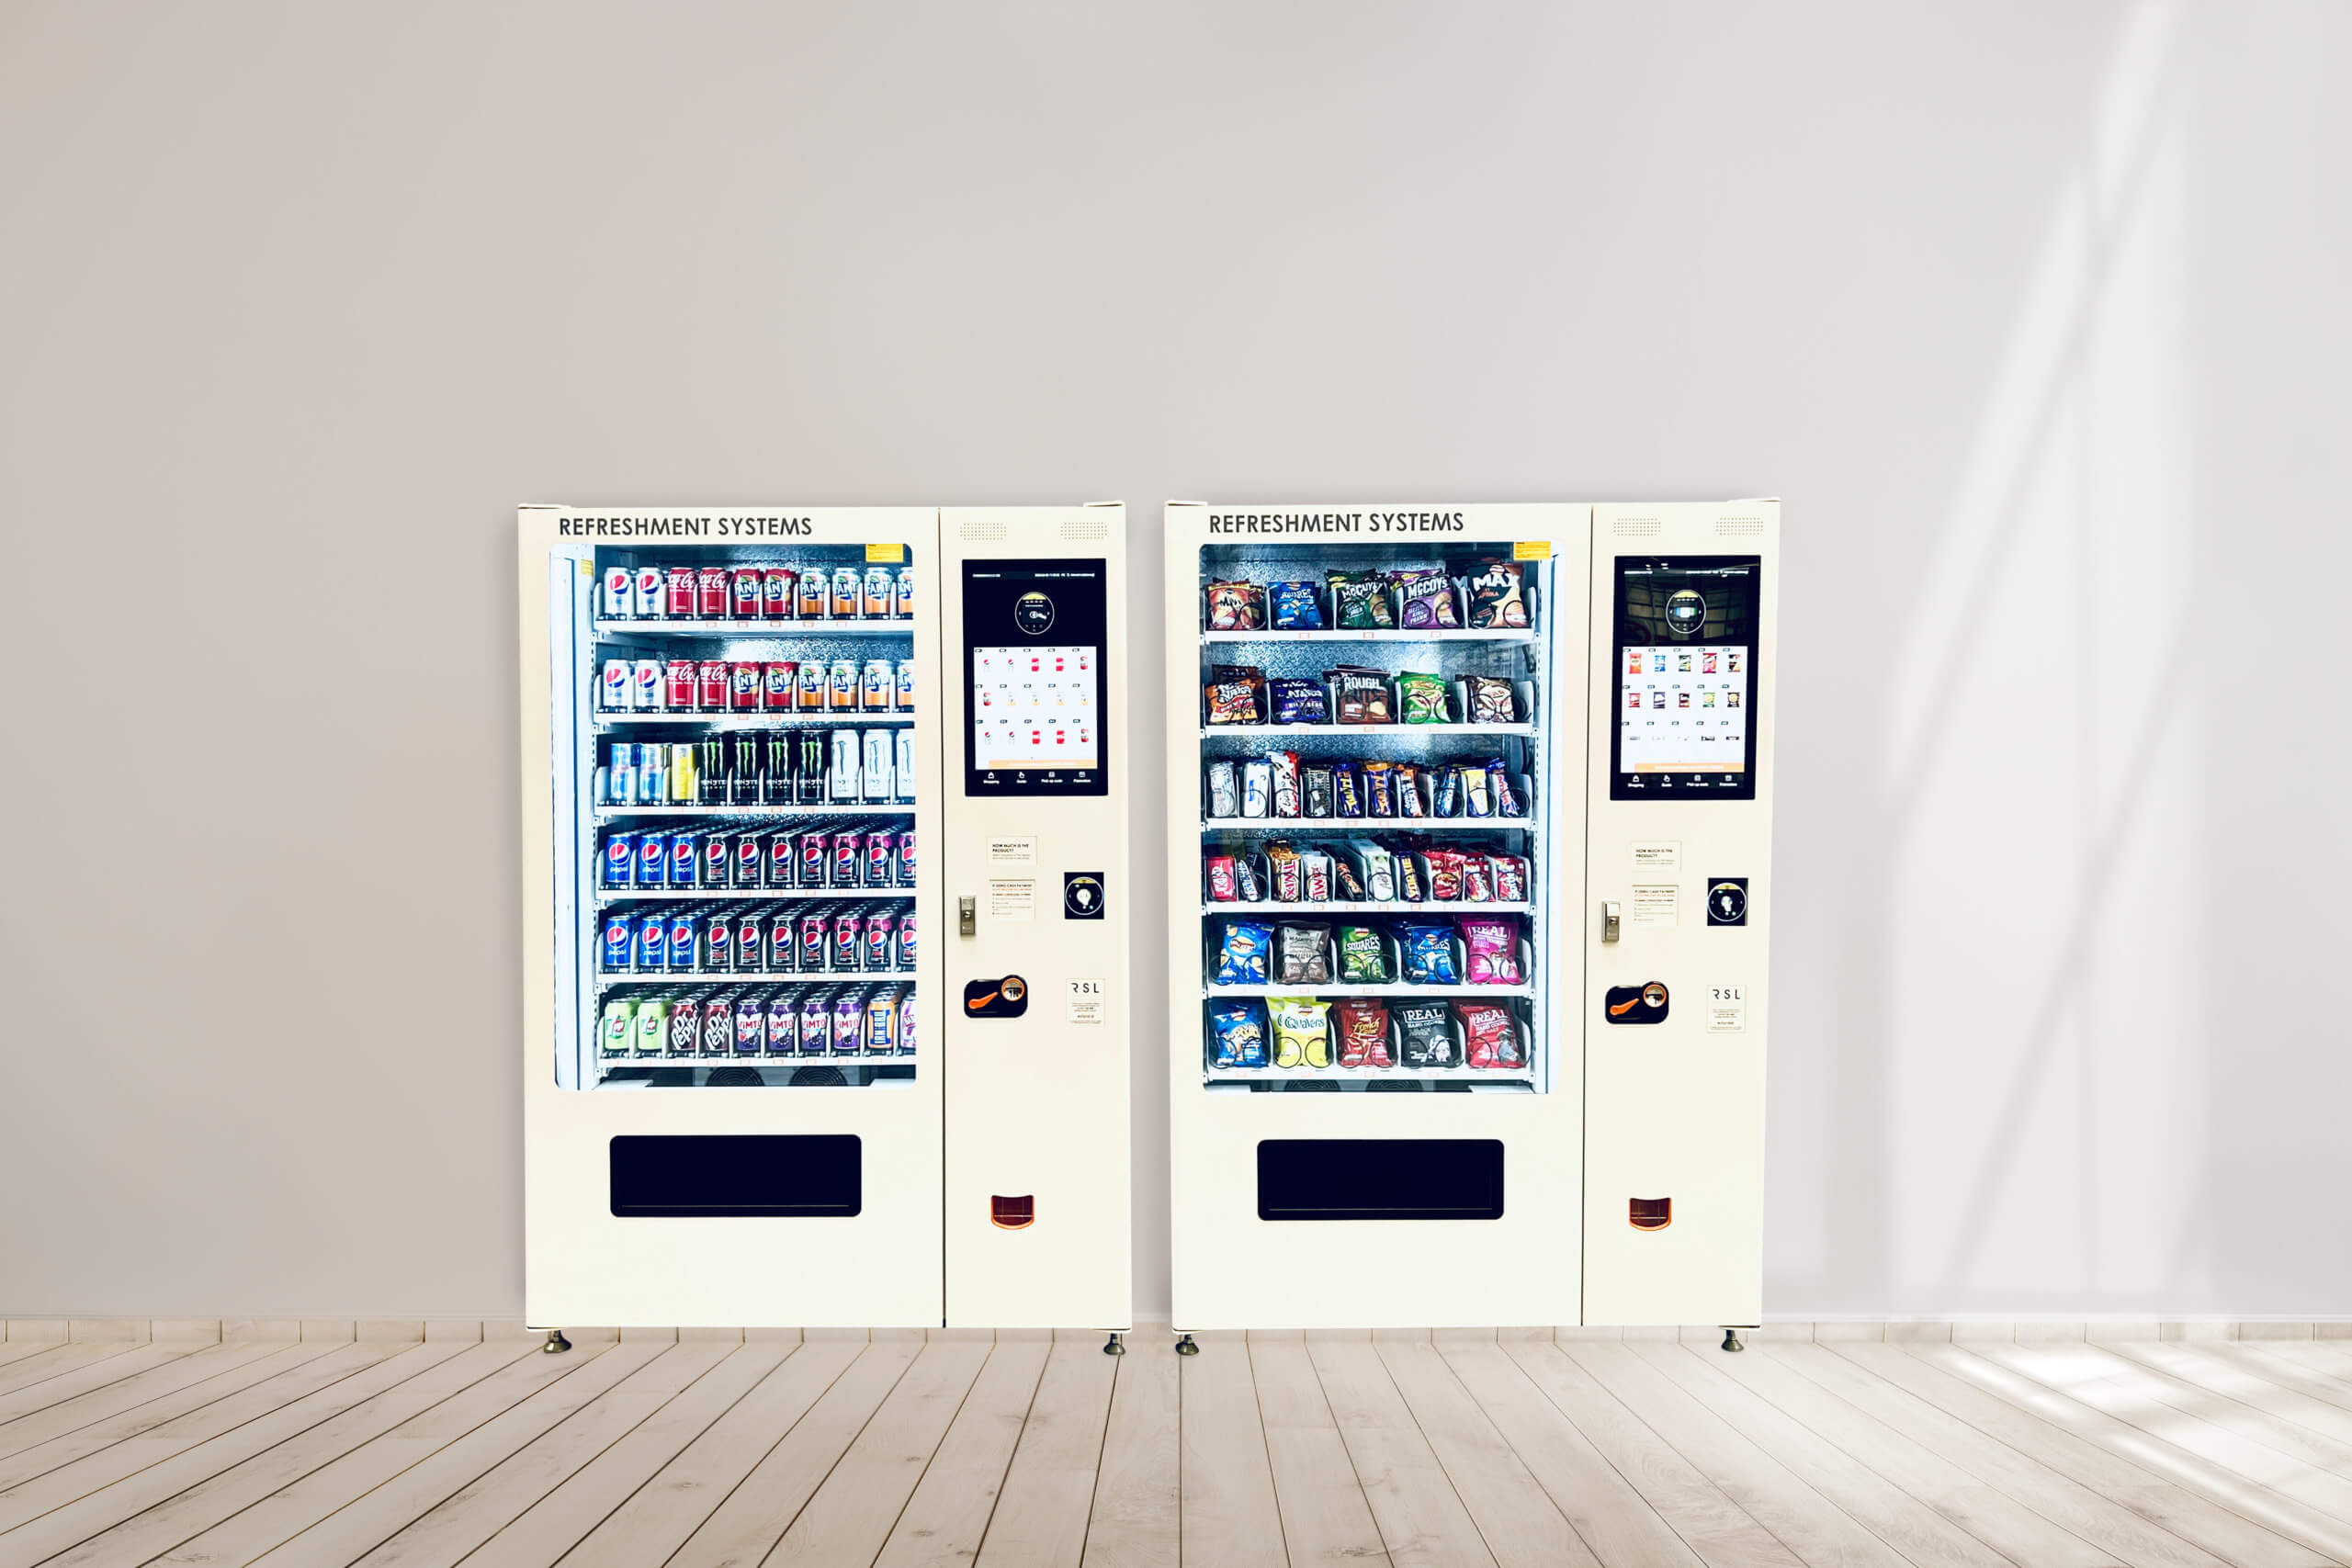 Intelligent vending machines